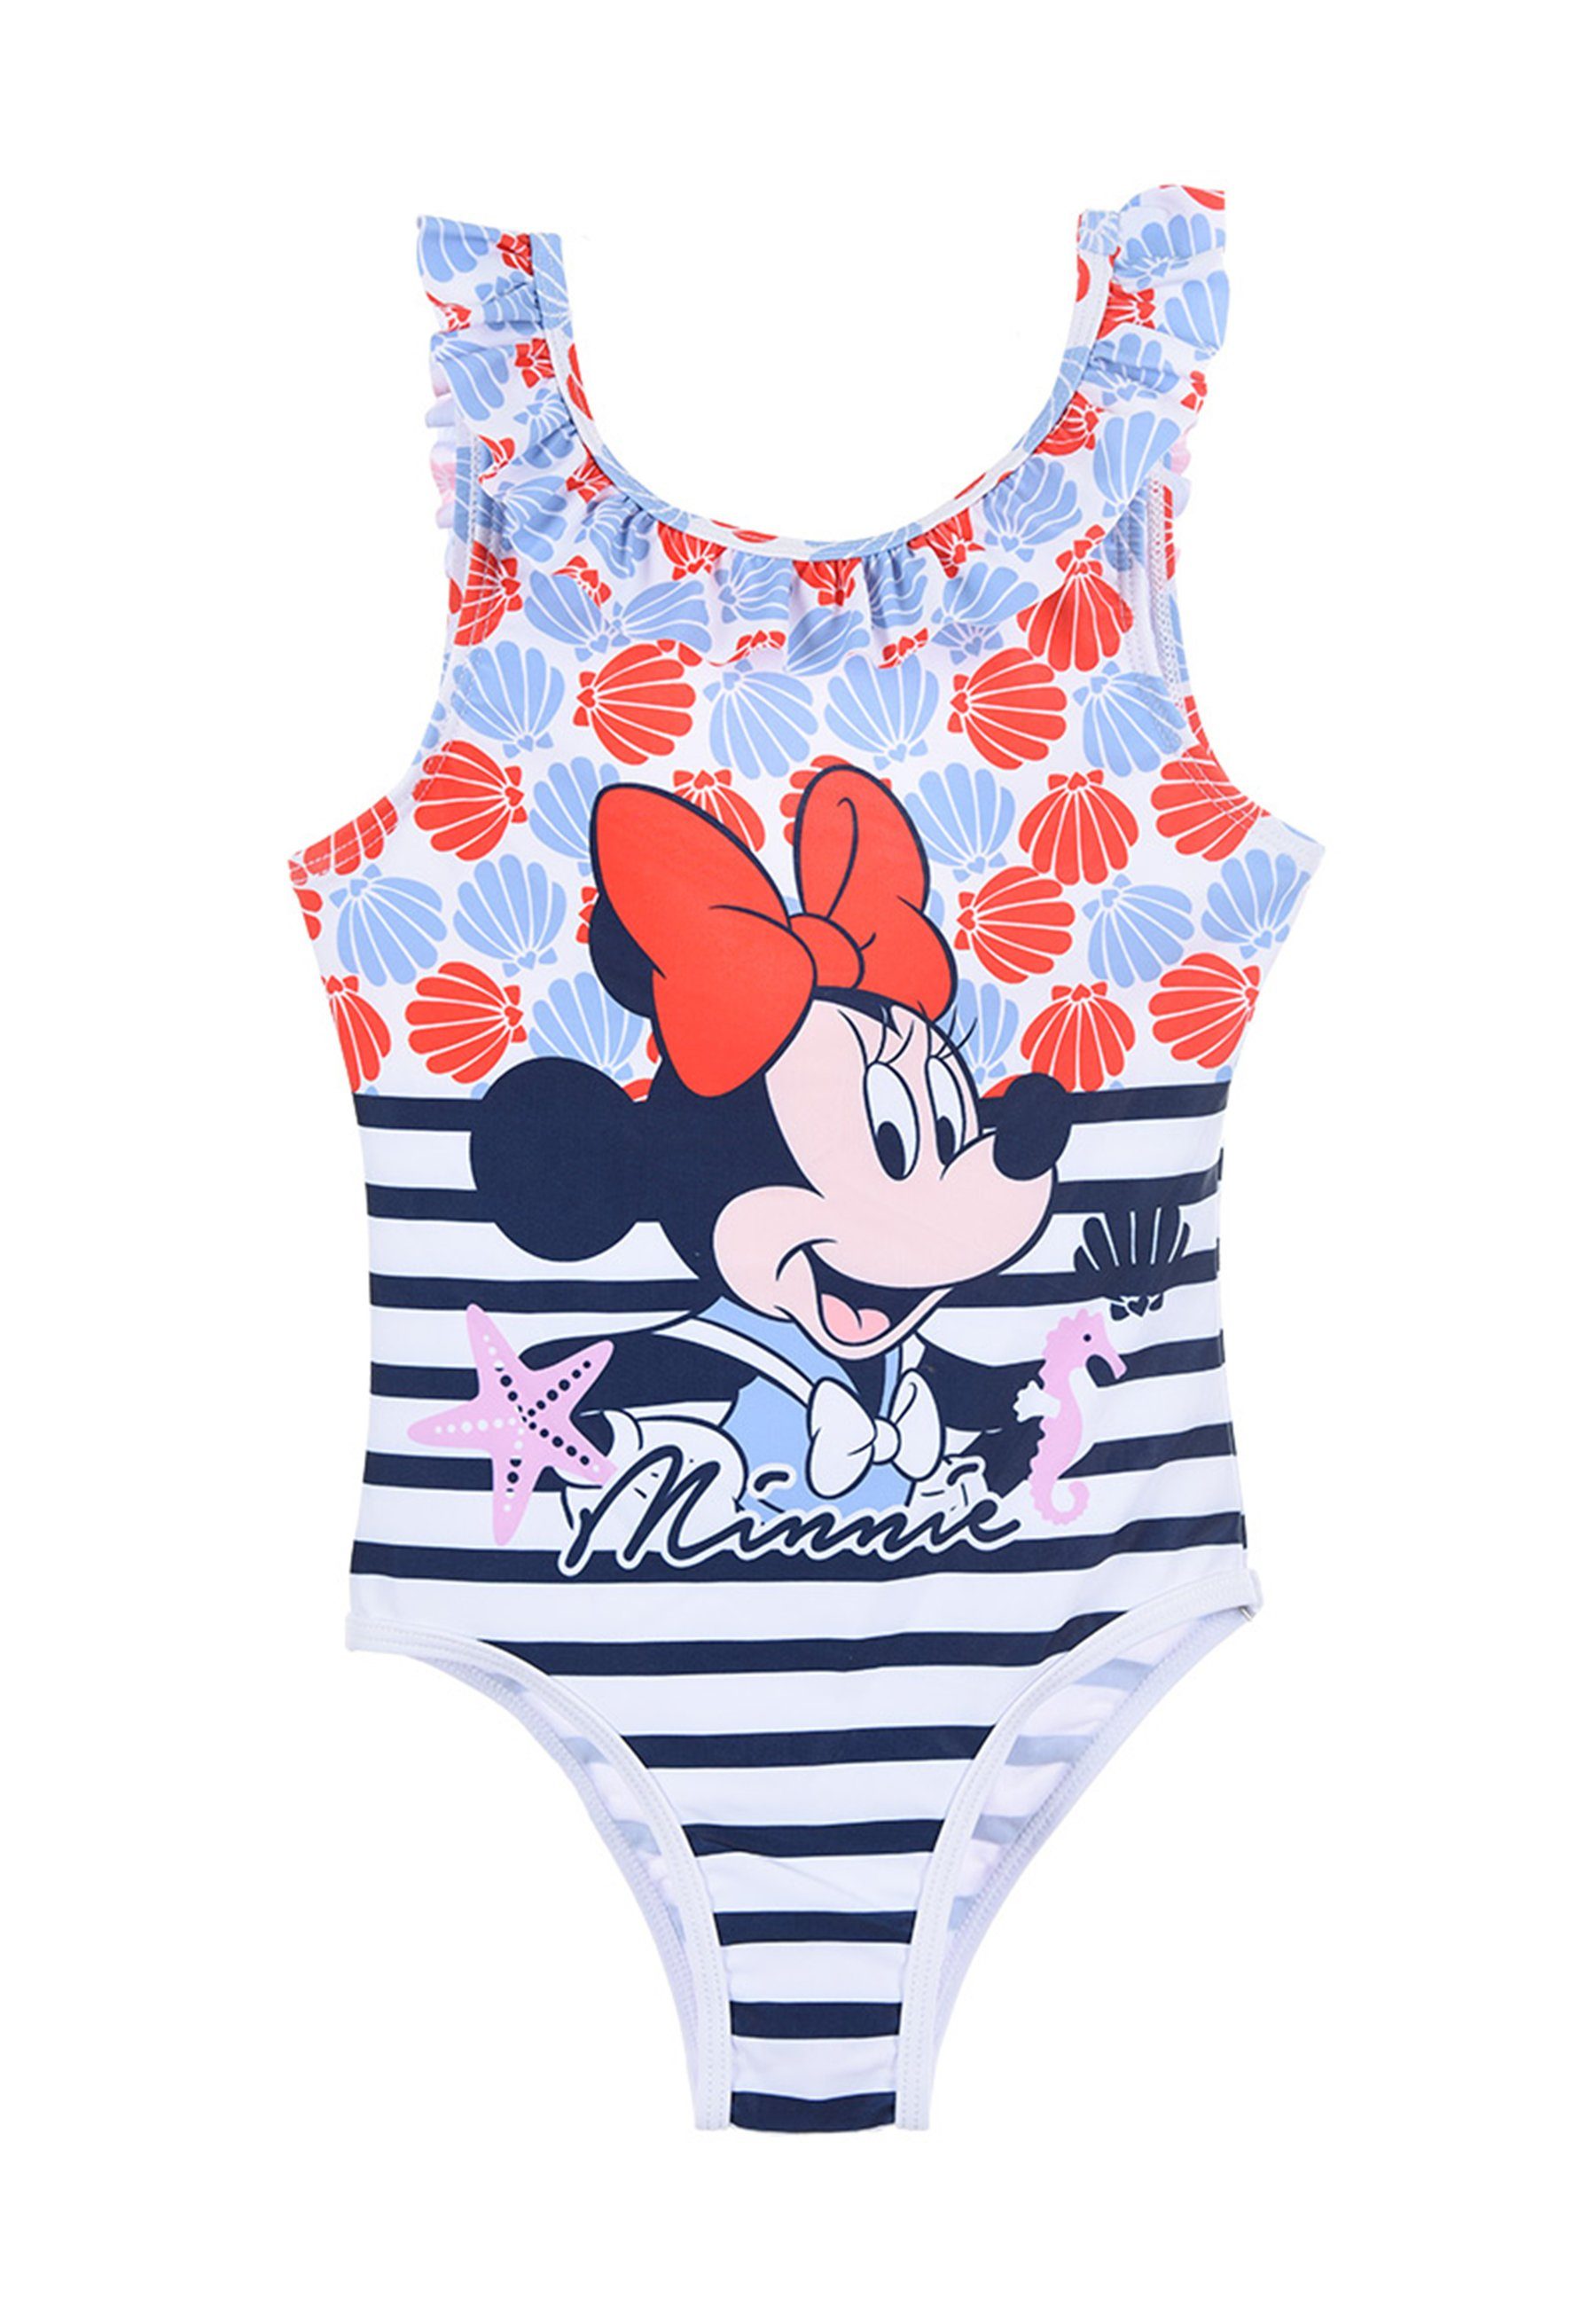 Badeanzug Mädchen Disney Minnie Mouse Bademode 1-Teiler Badeanzug